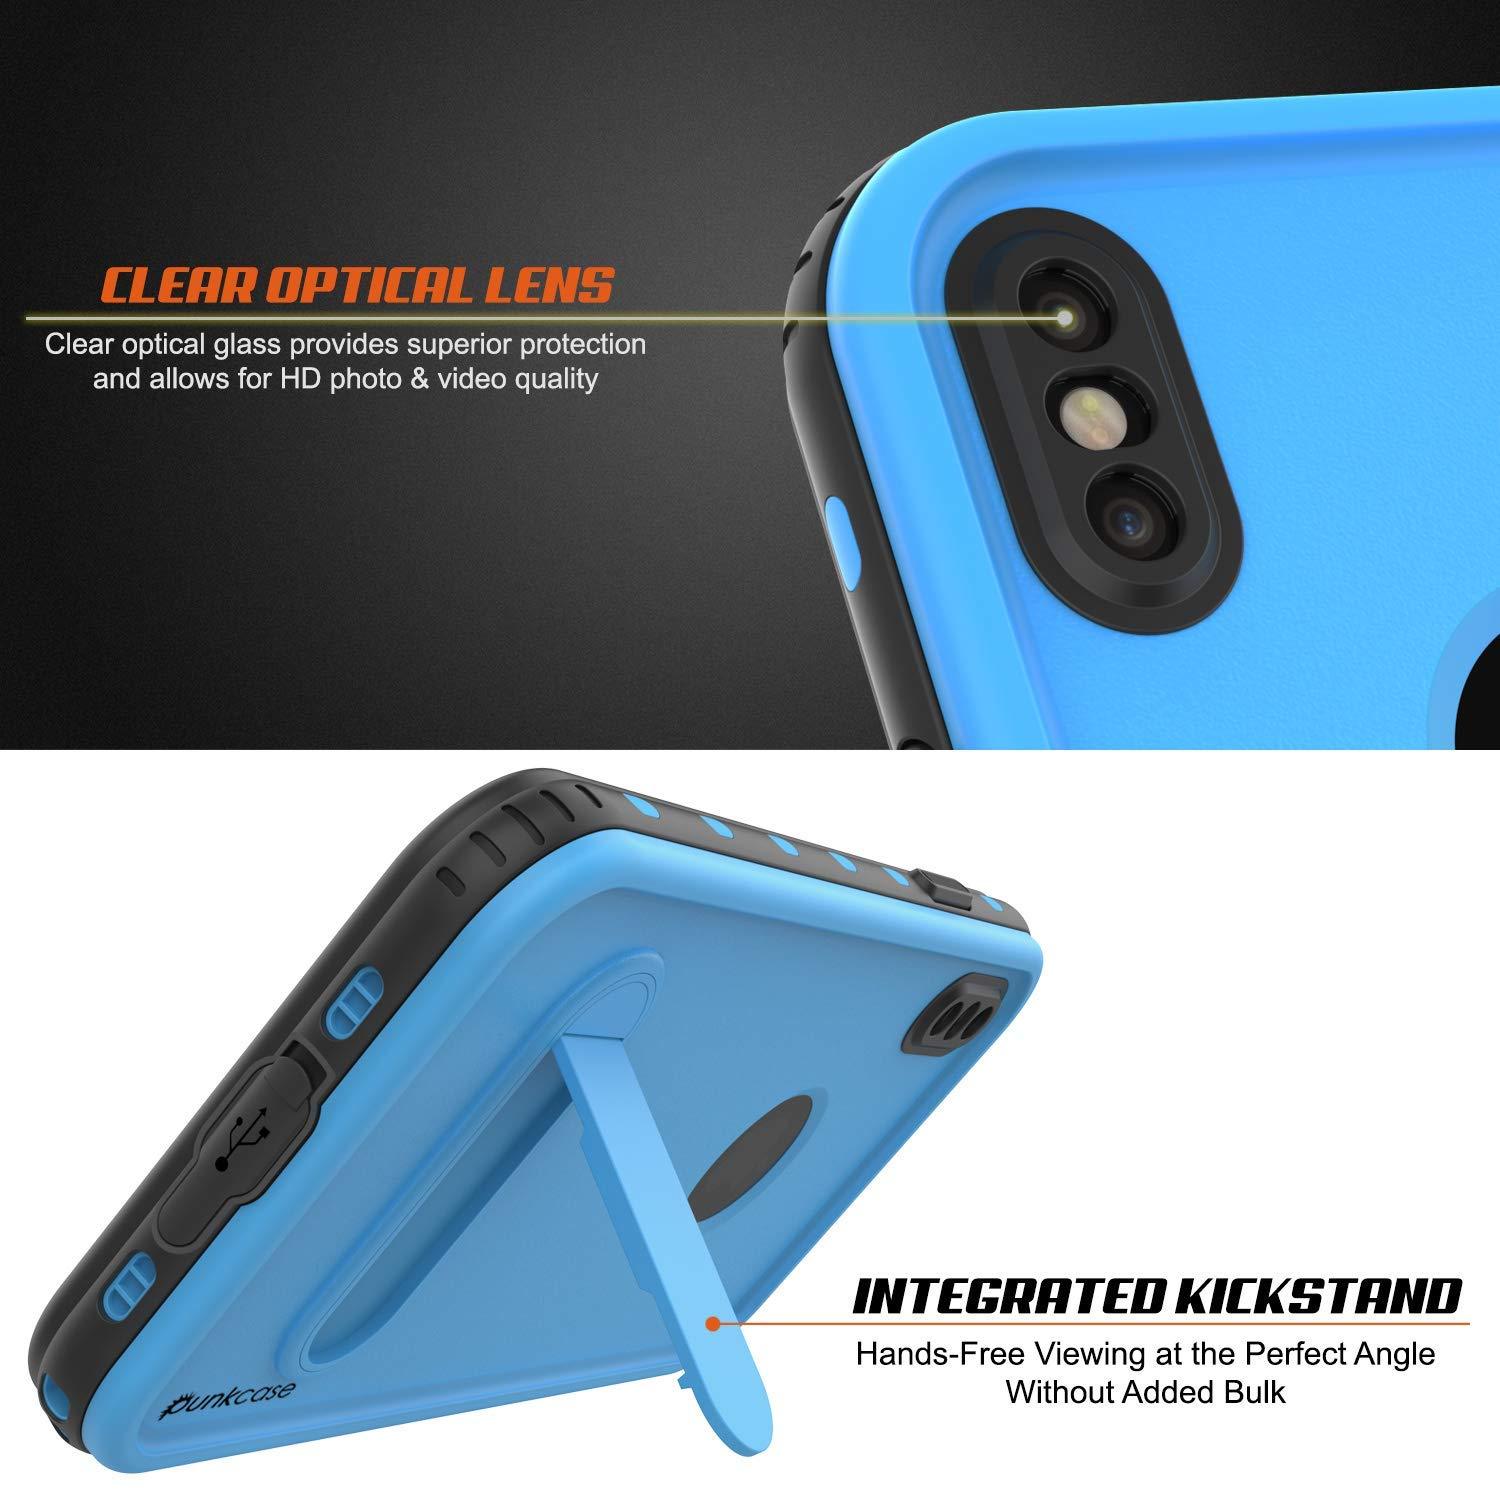 iPhone XS Waterproof Case, Punkcase [KickStud Series] Armor Cover [Light-Blue]